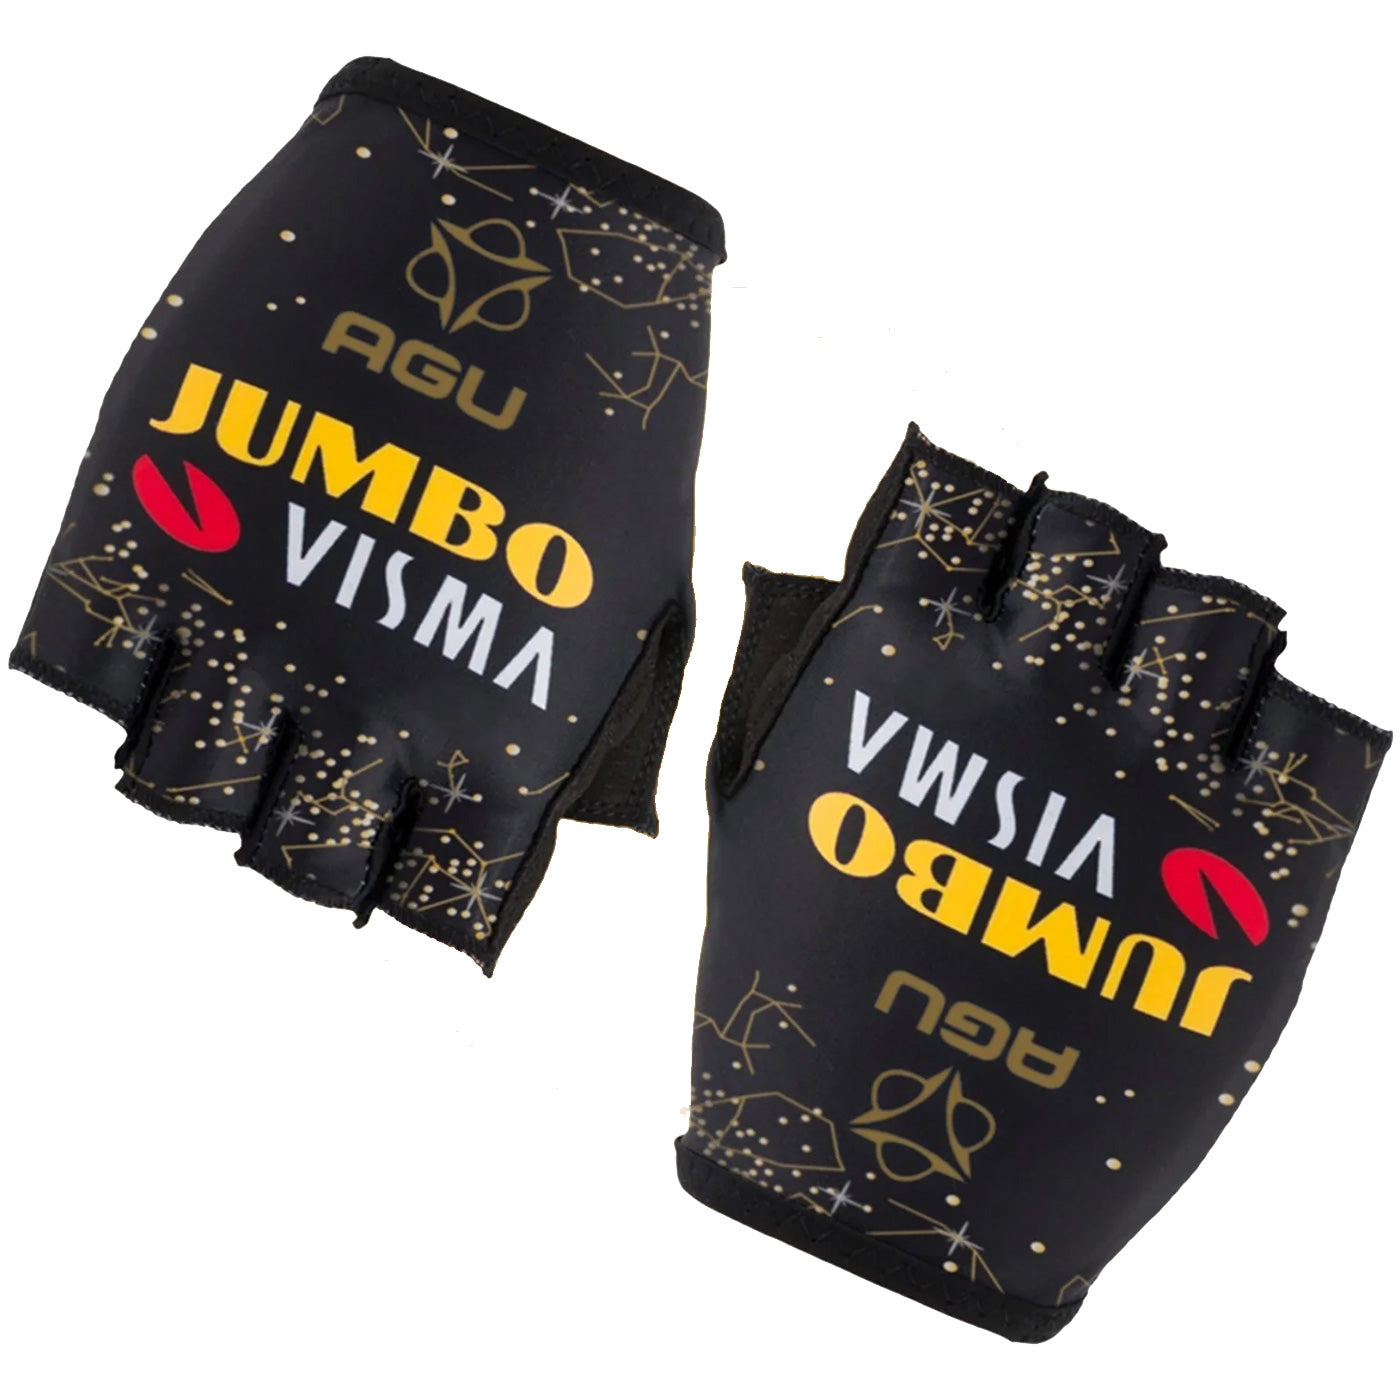 Jumbo Visma 2023 The Velodrome gloves - Tdf